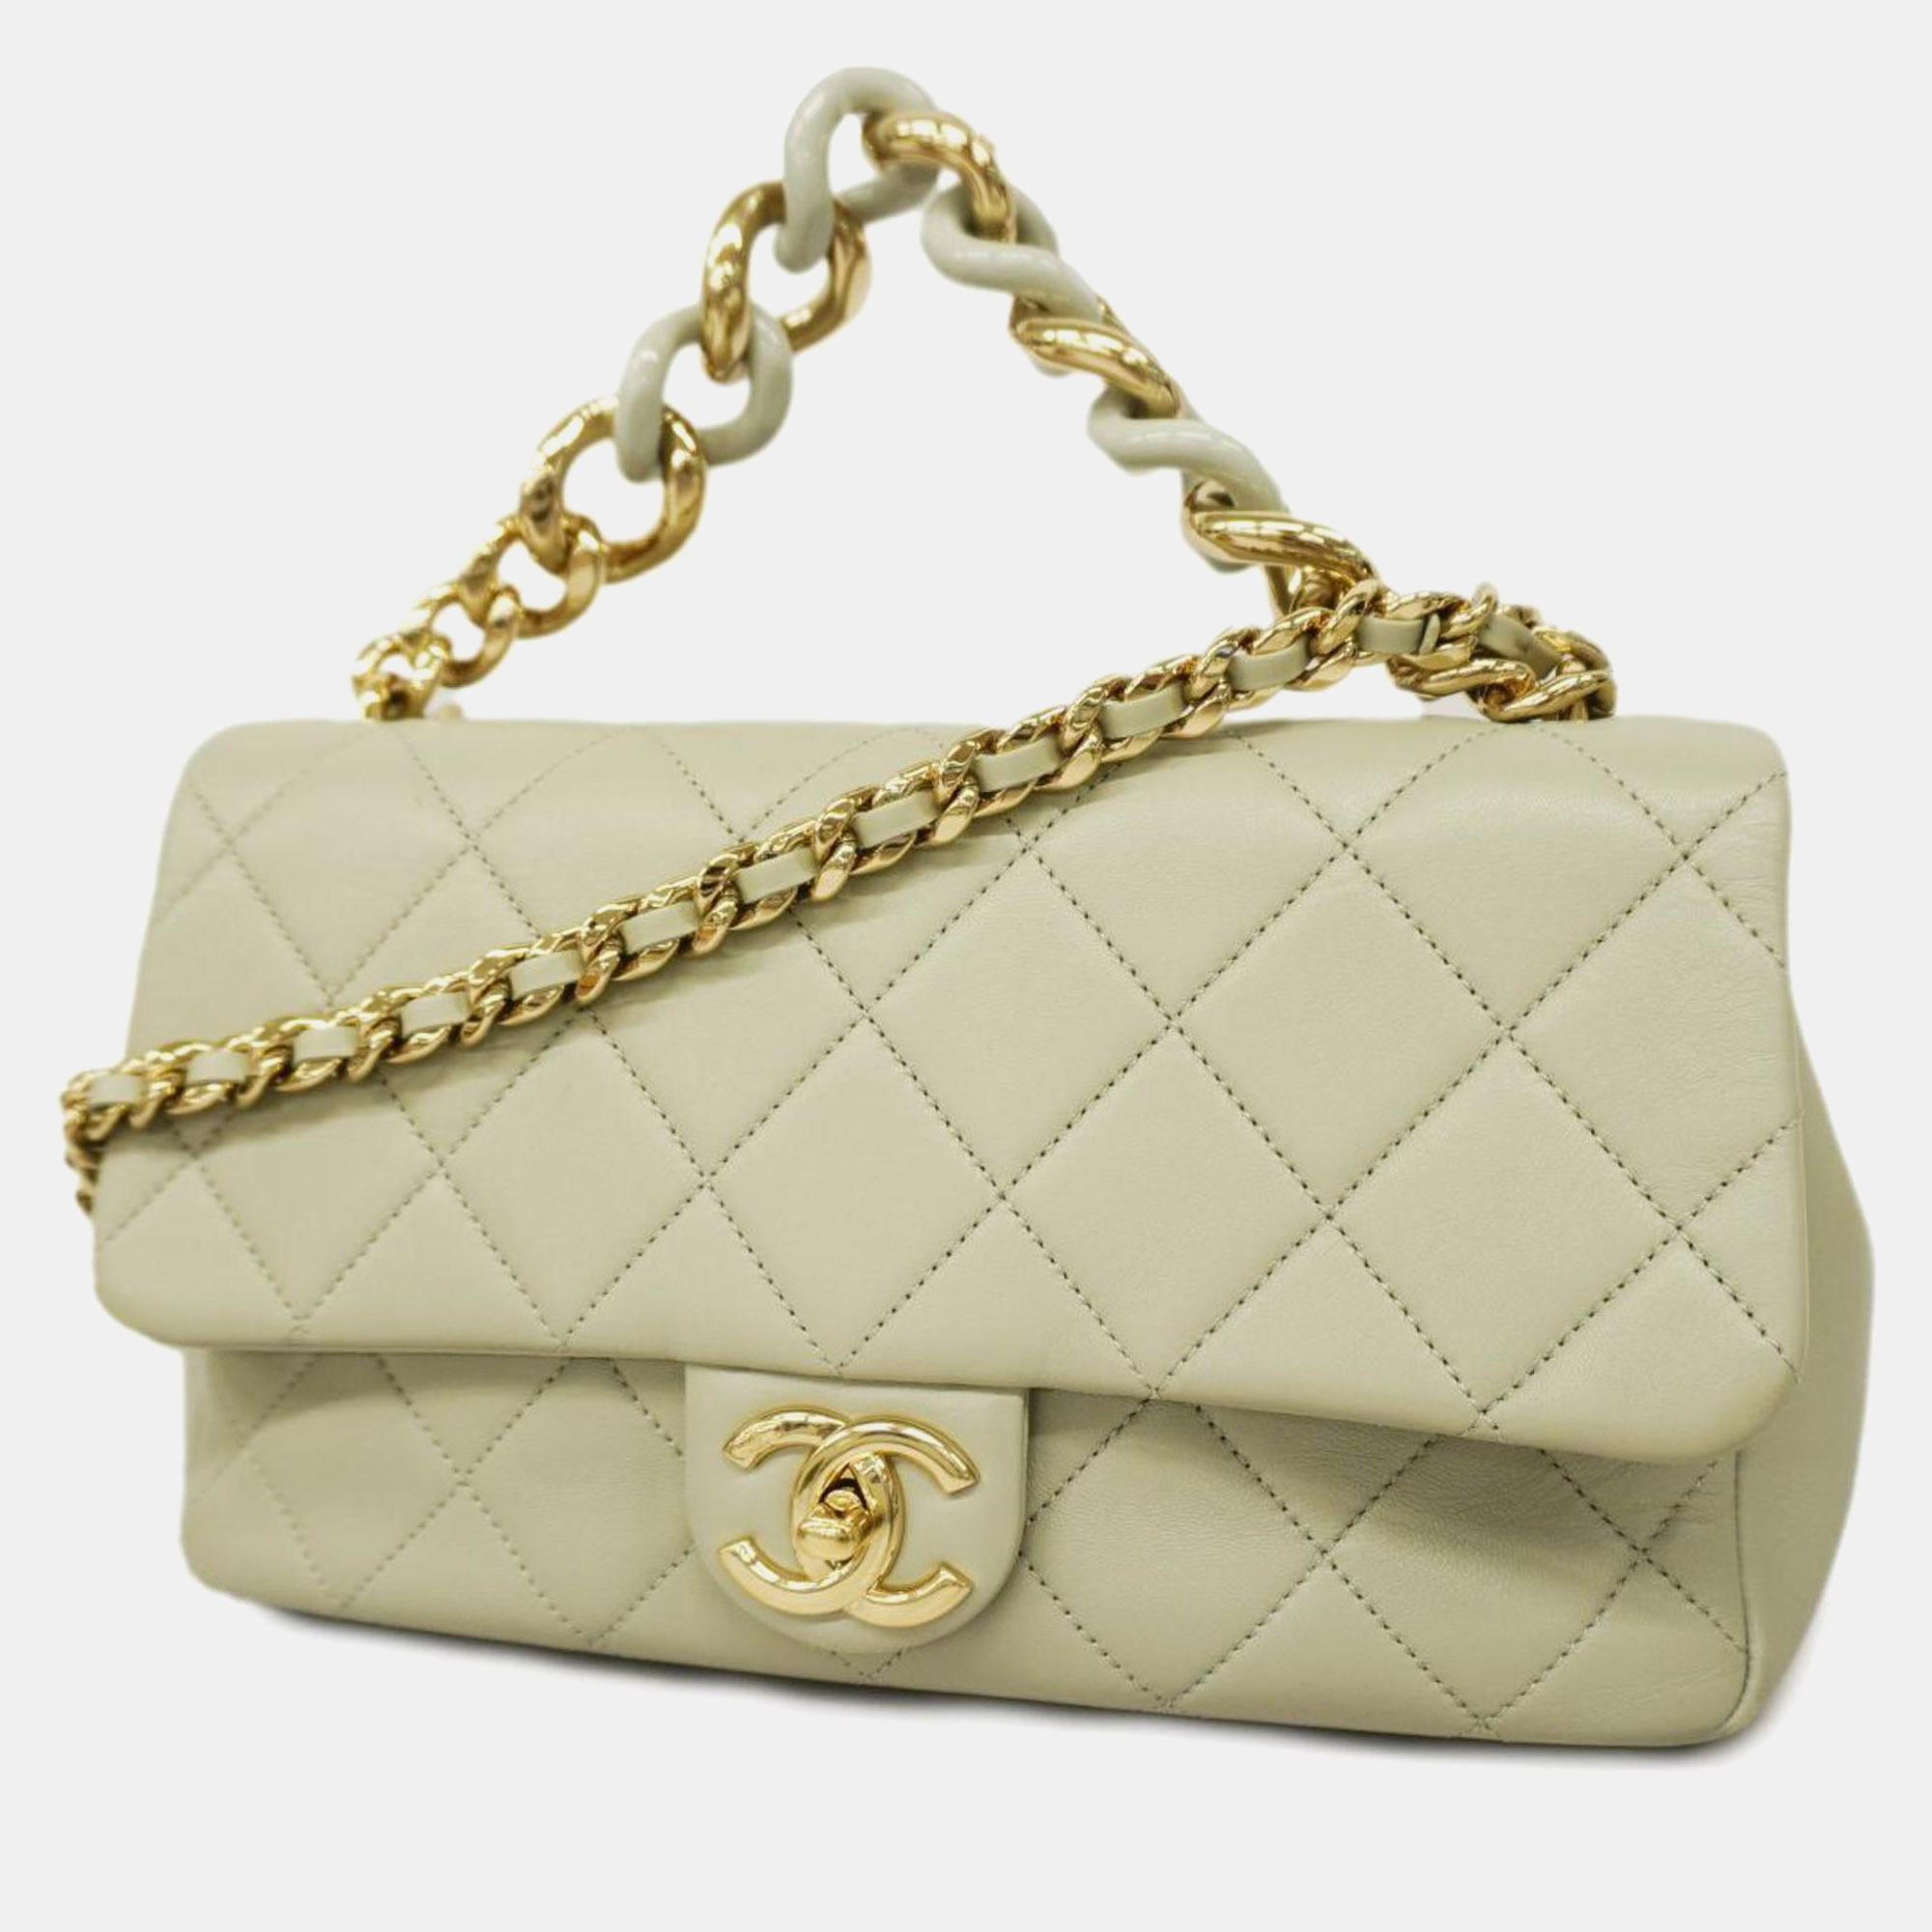 Chanel beige leather elegant chain flap bag